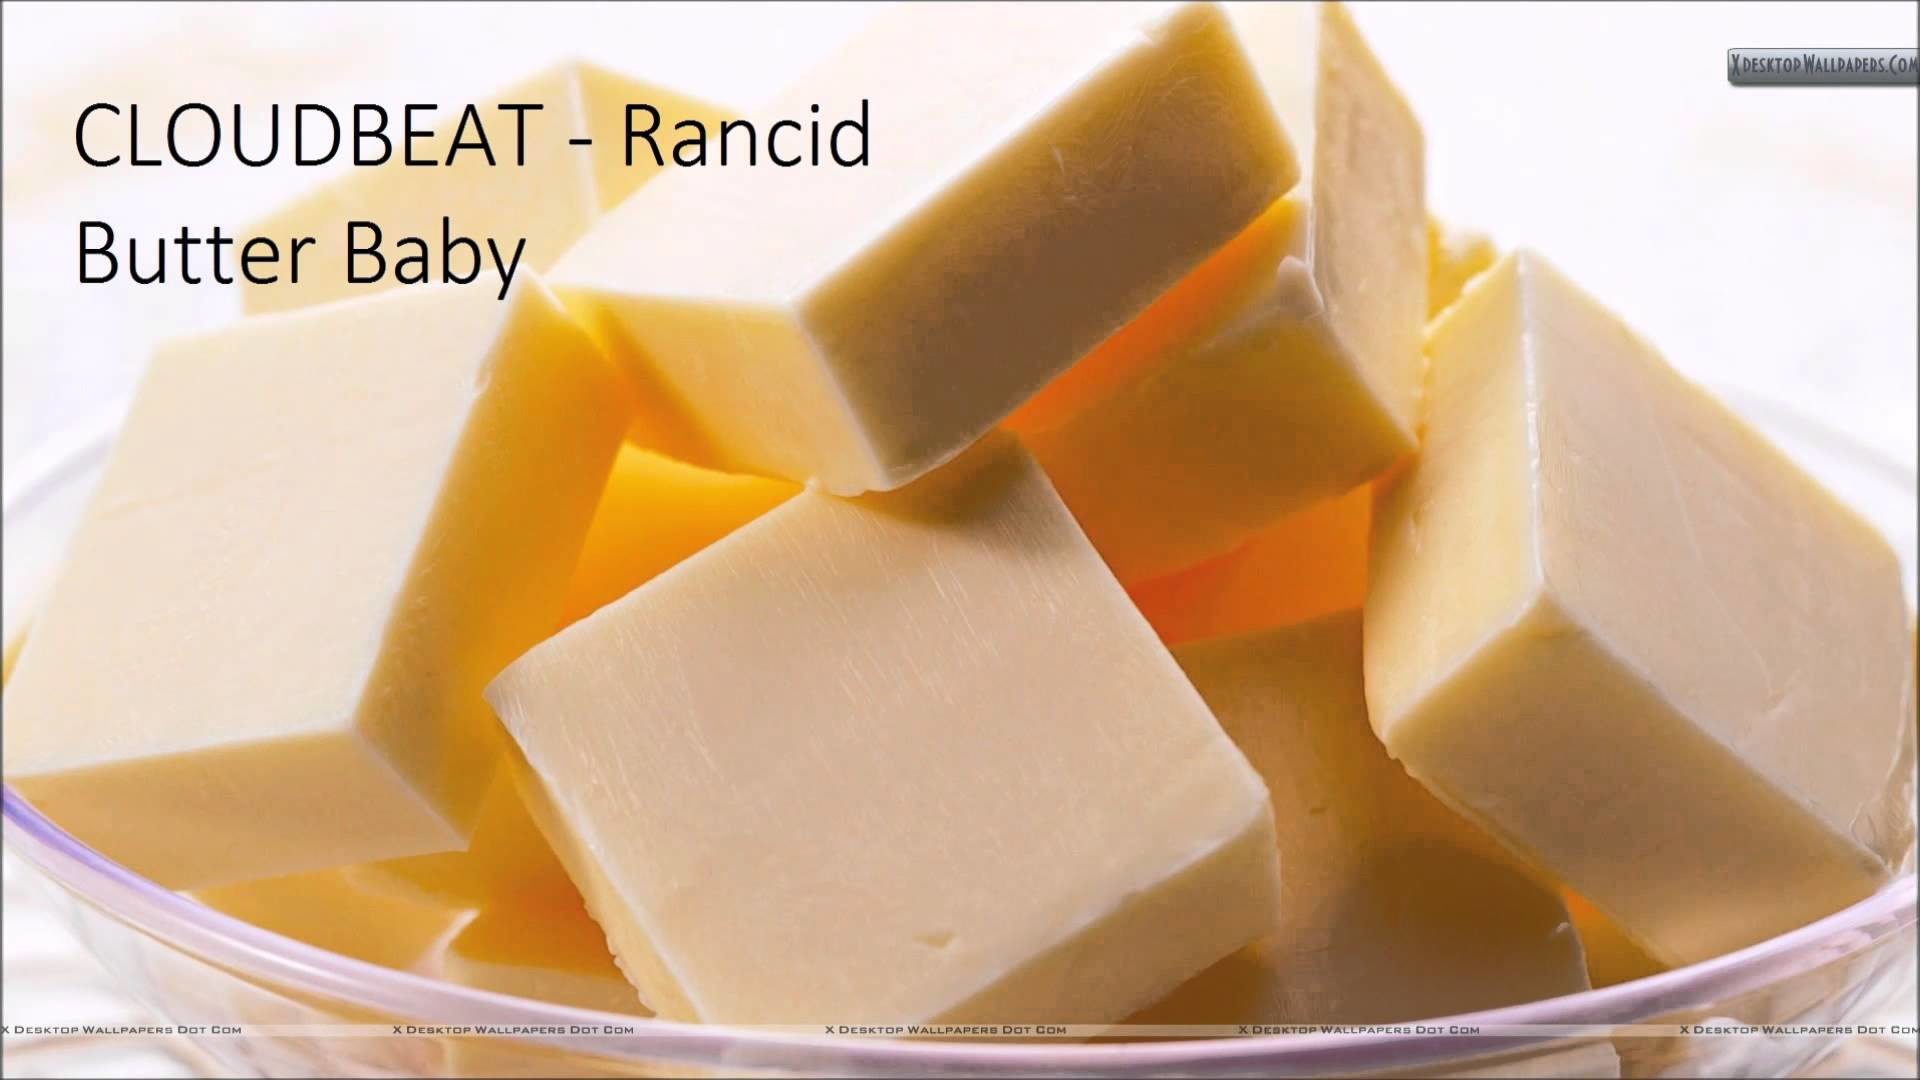 1920x1080 Cloudbeat - Rancid Butter Baby